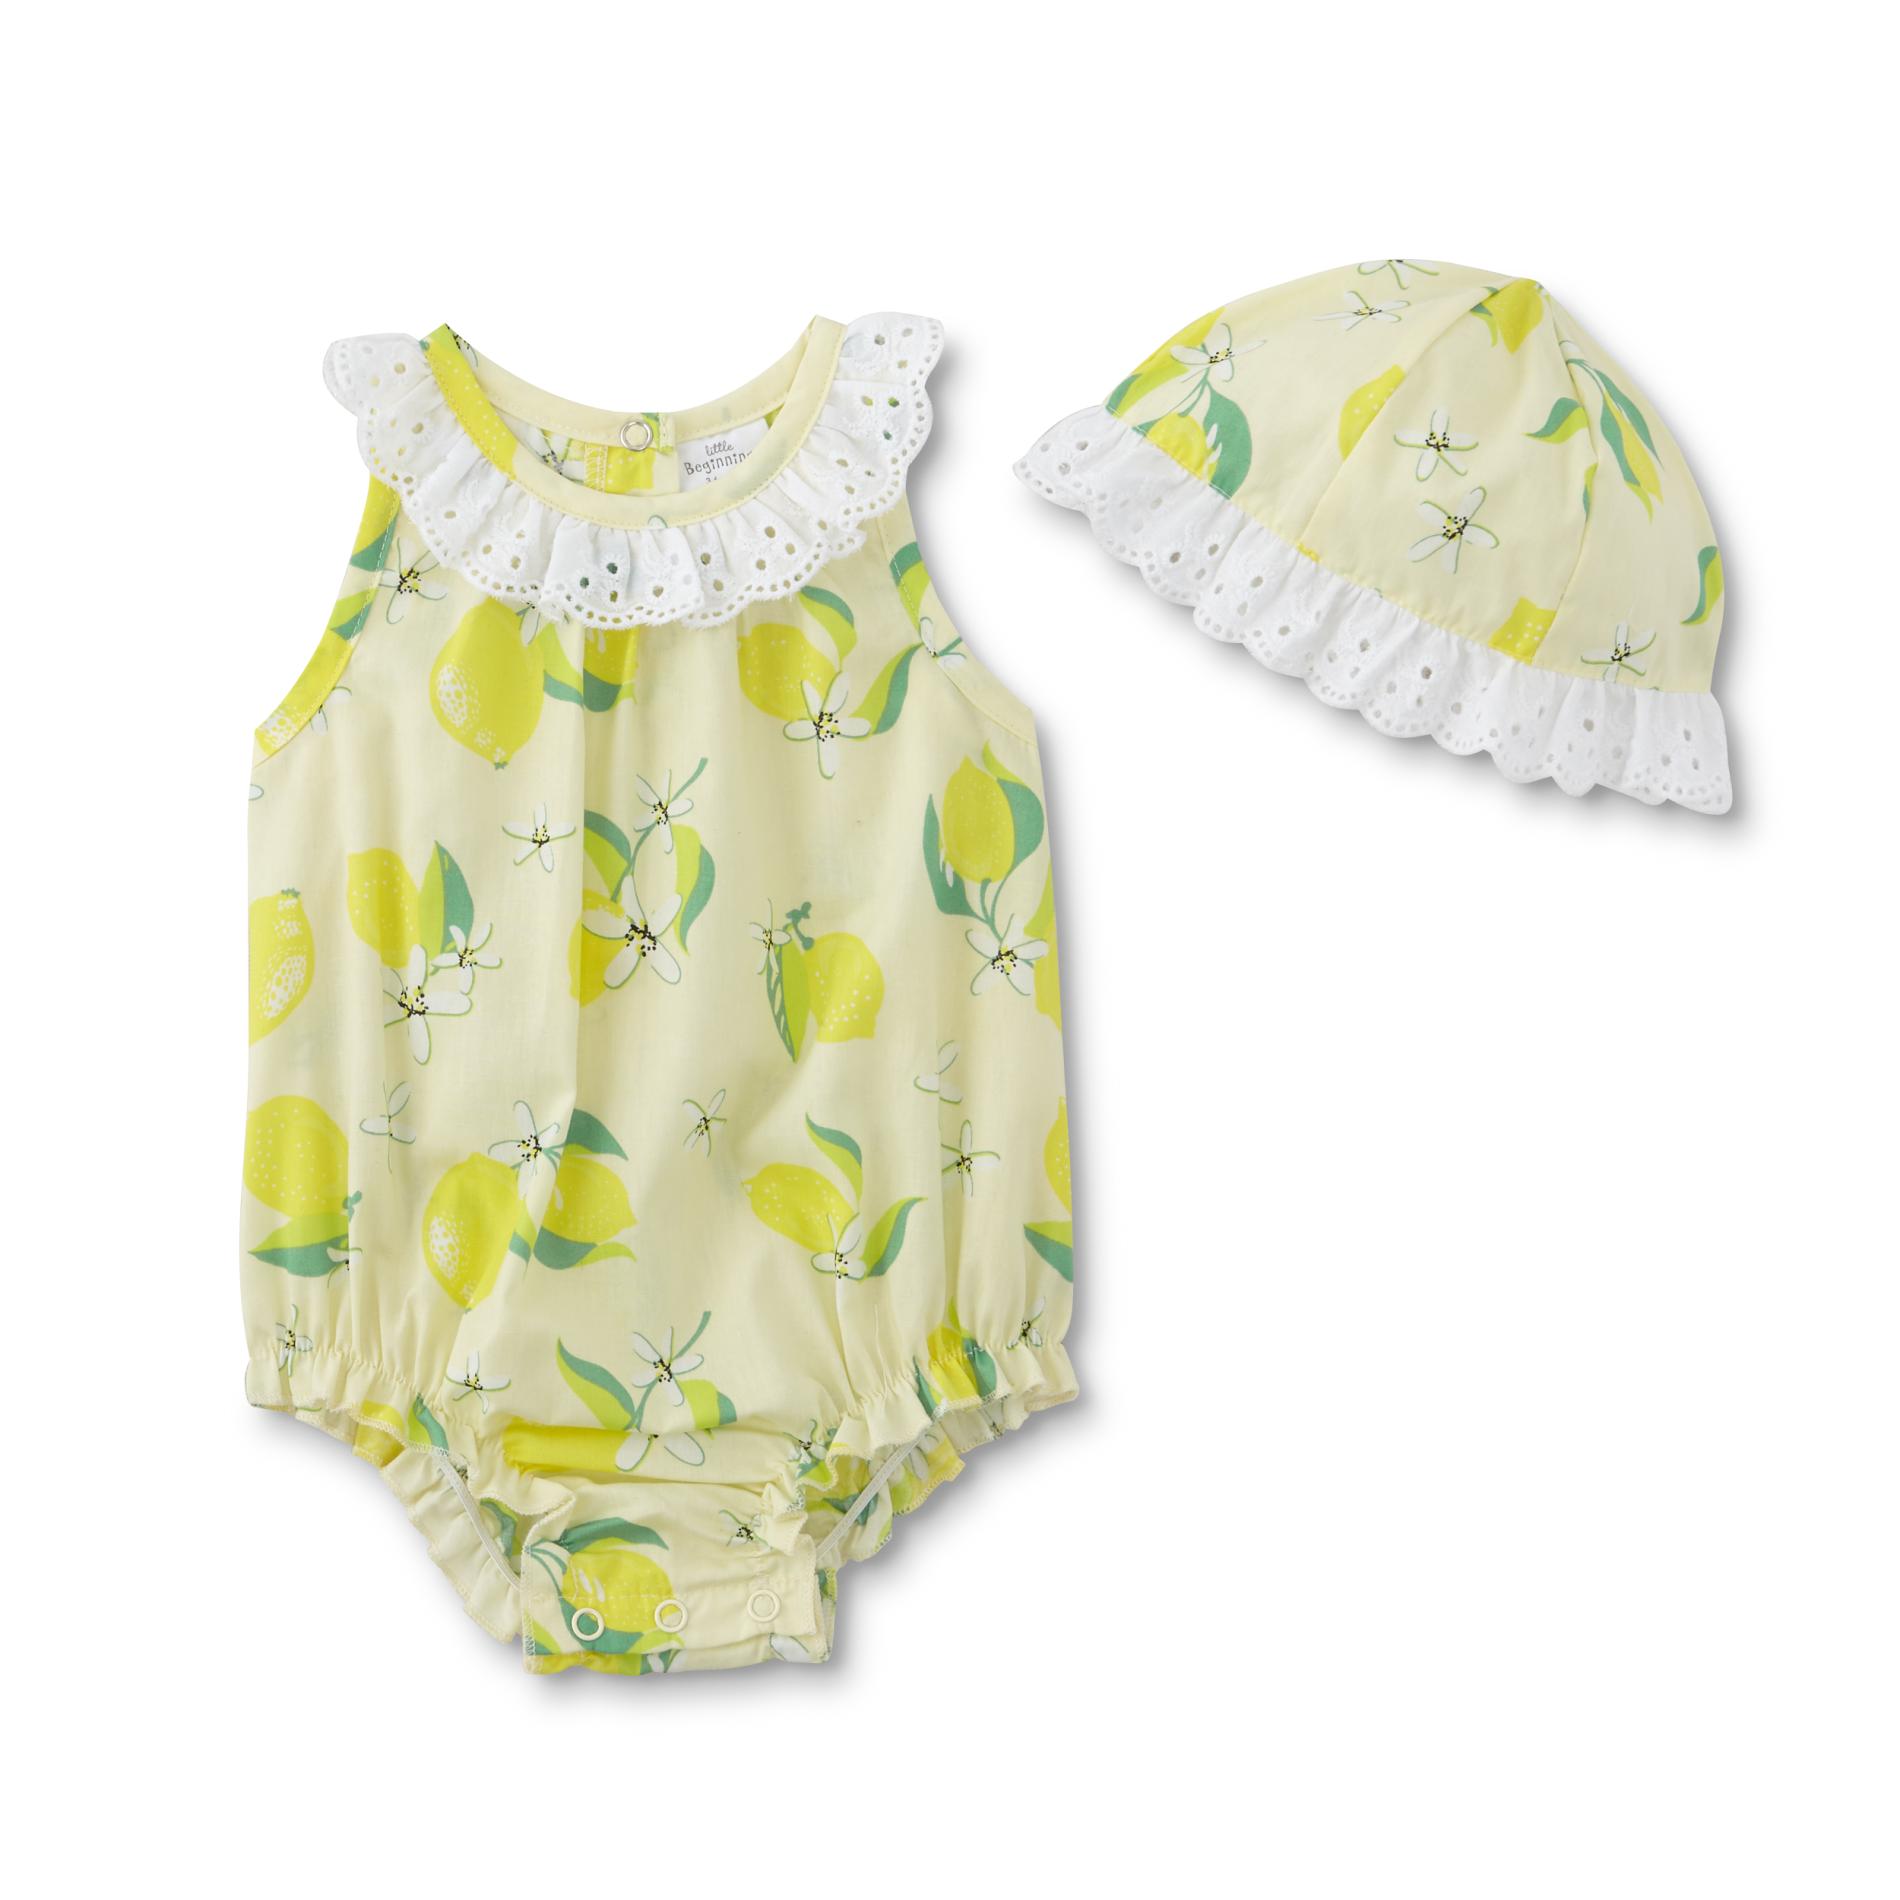 Cudlie Infant Girls' Romper & Cap - Floral